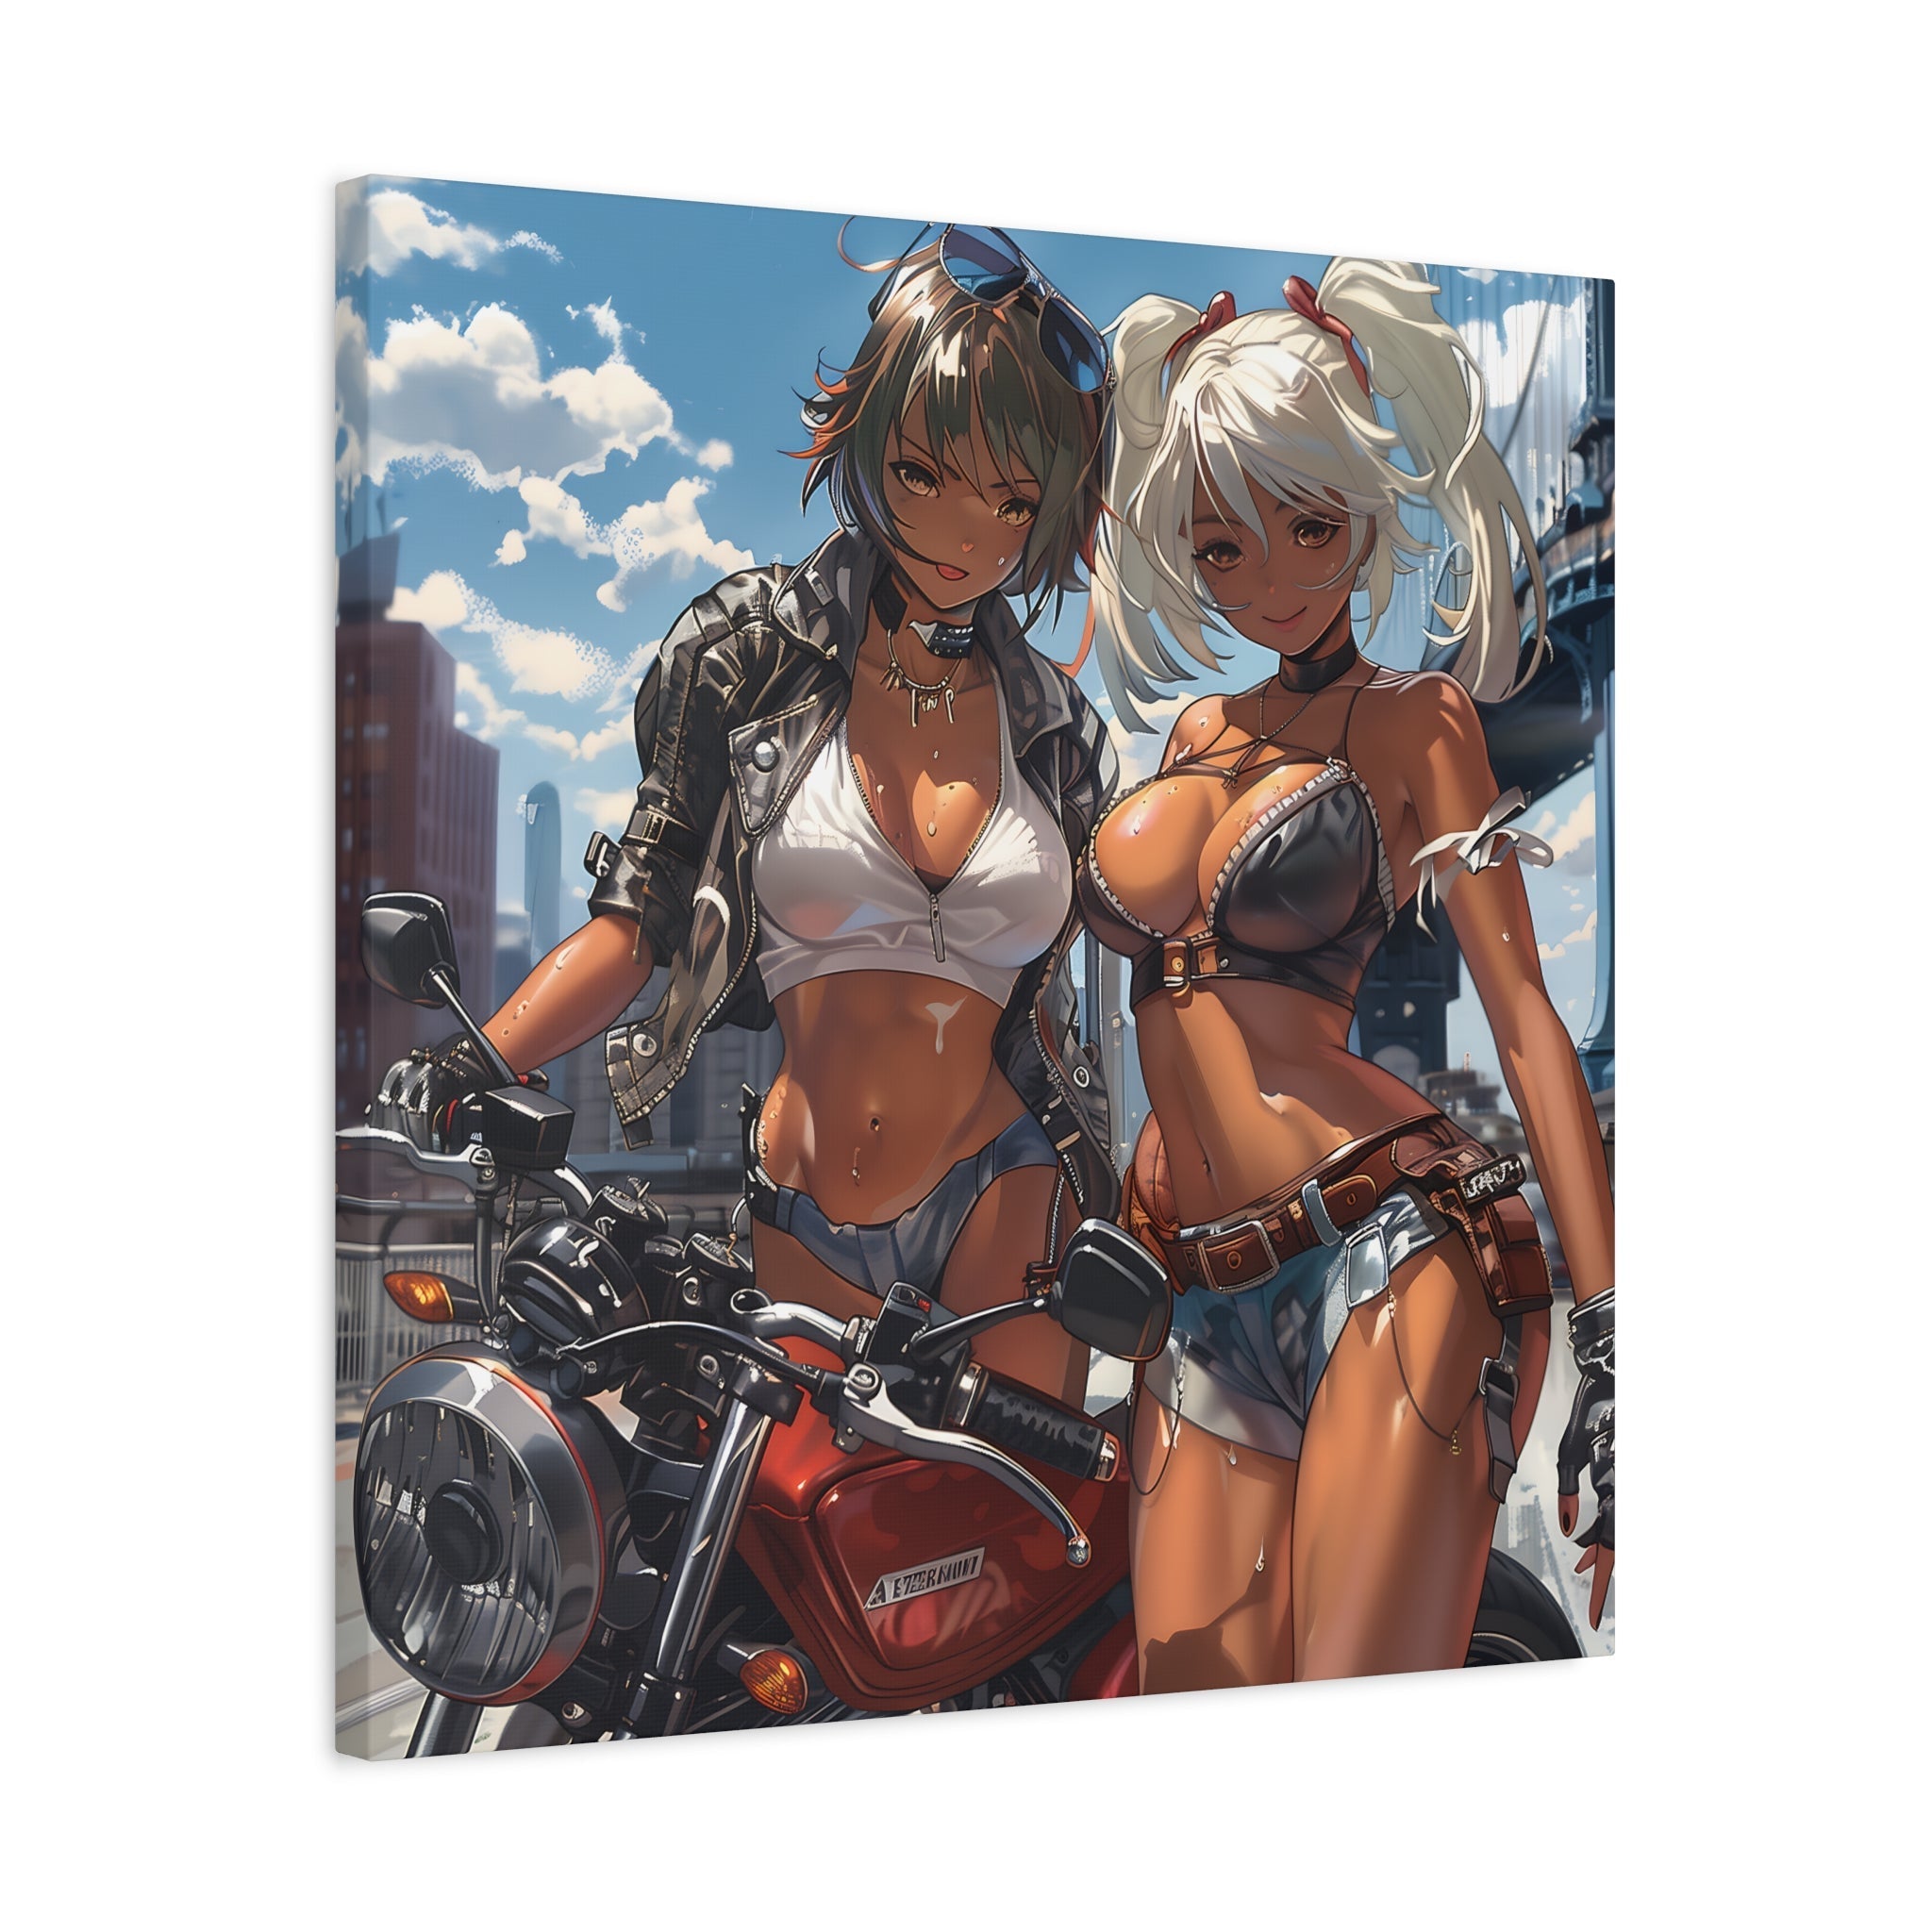 Motorrad-Art, Fotoleinwand Motorradmotiv-Motorradfahrer-Manga-Anime-Niji-Steampunk